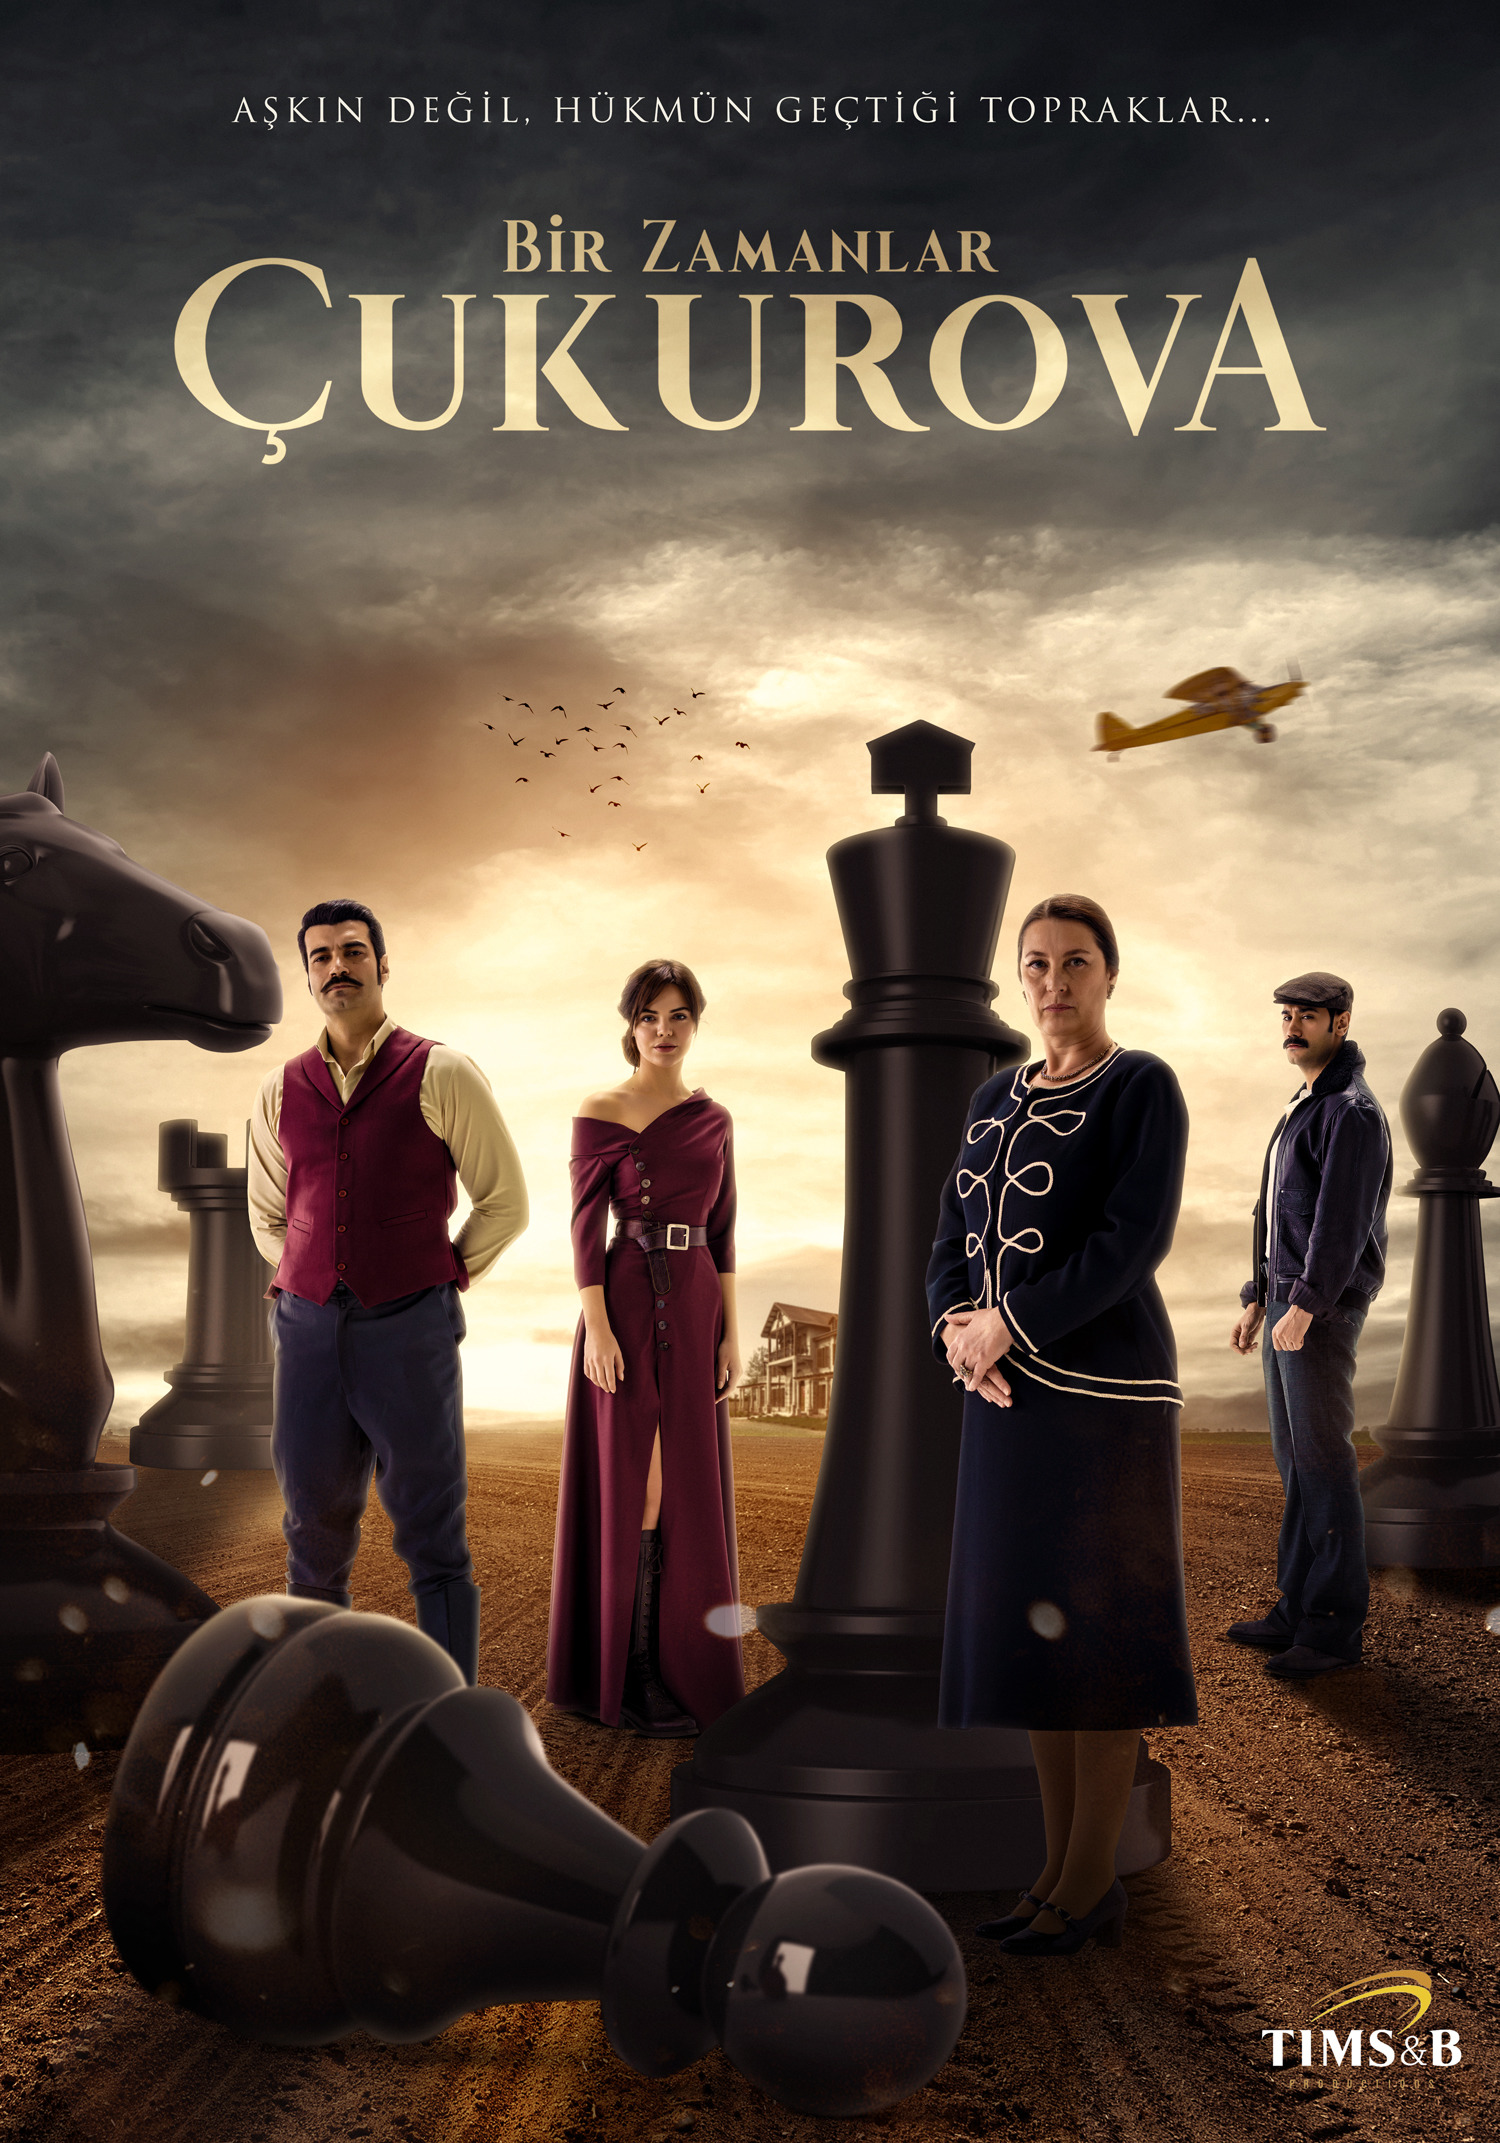 Mega Sized TV Poster Image for Bir zamanlar Çukurova (#4 of 12)